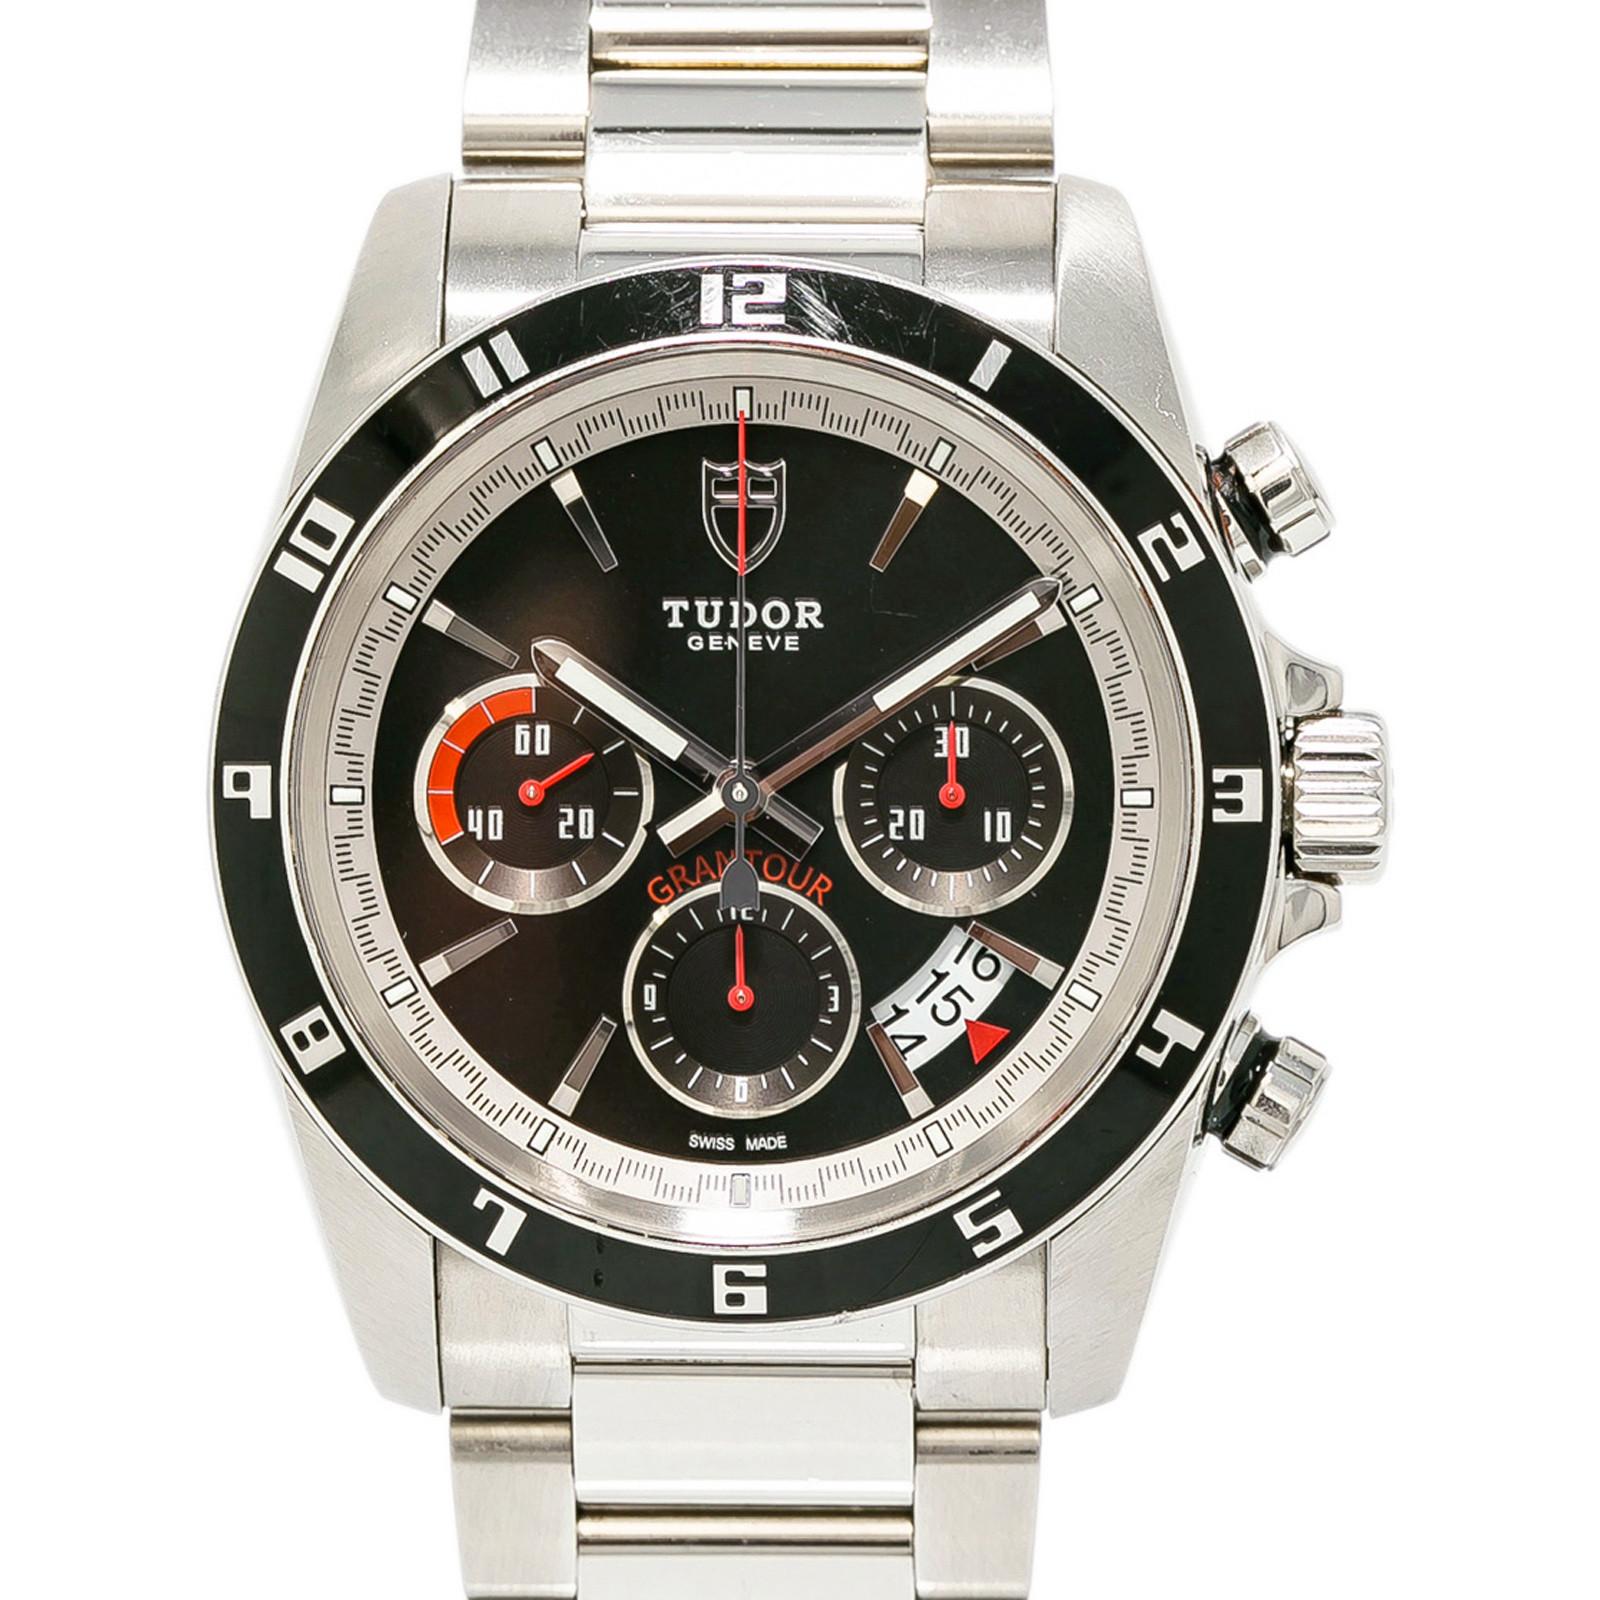 Tudor Grantour 20530N Men's Automatic Chronograph Watch Black Dial Steel For Sale 1